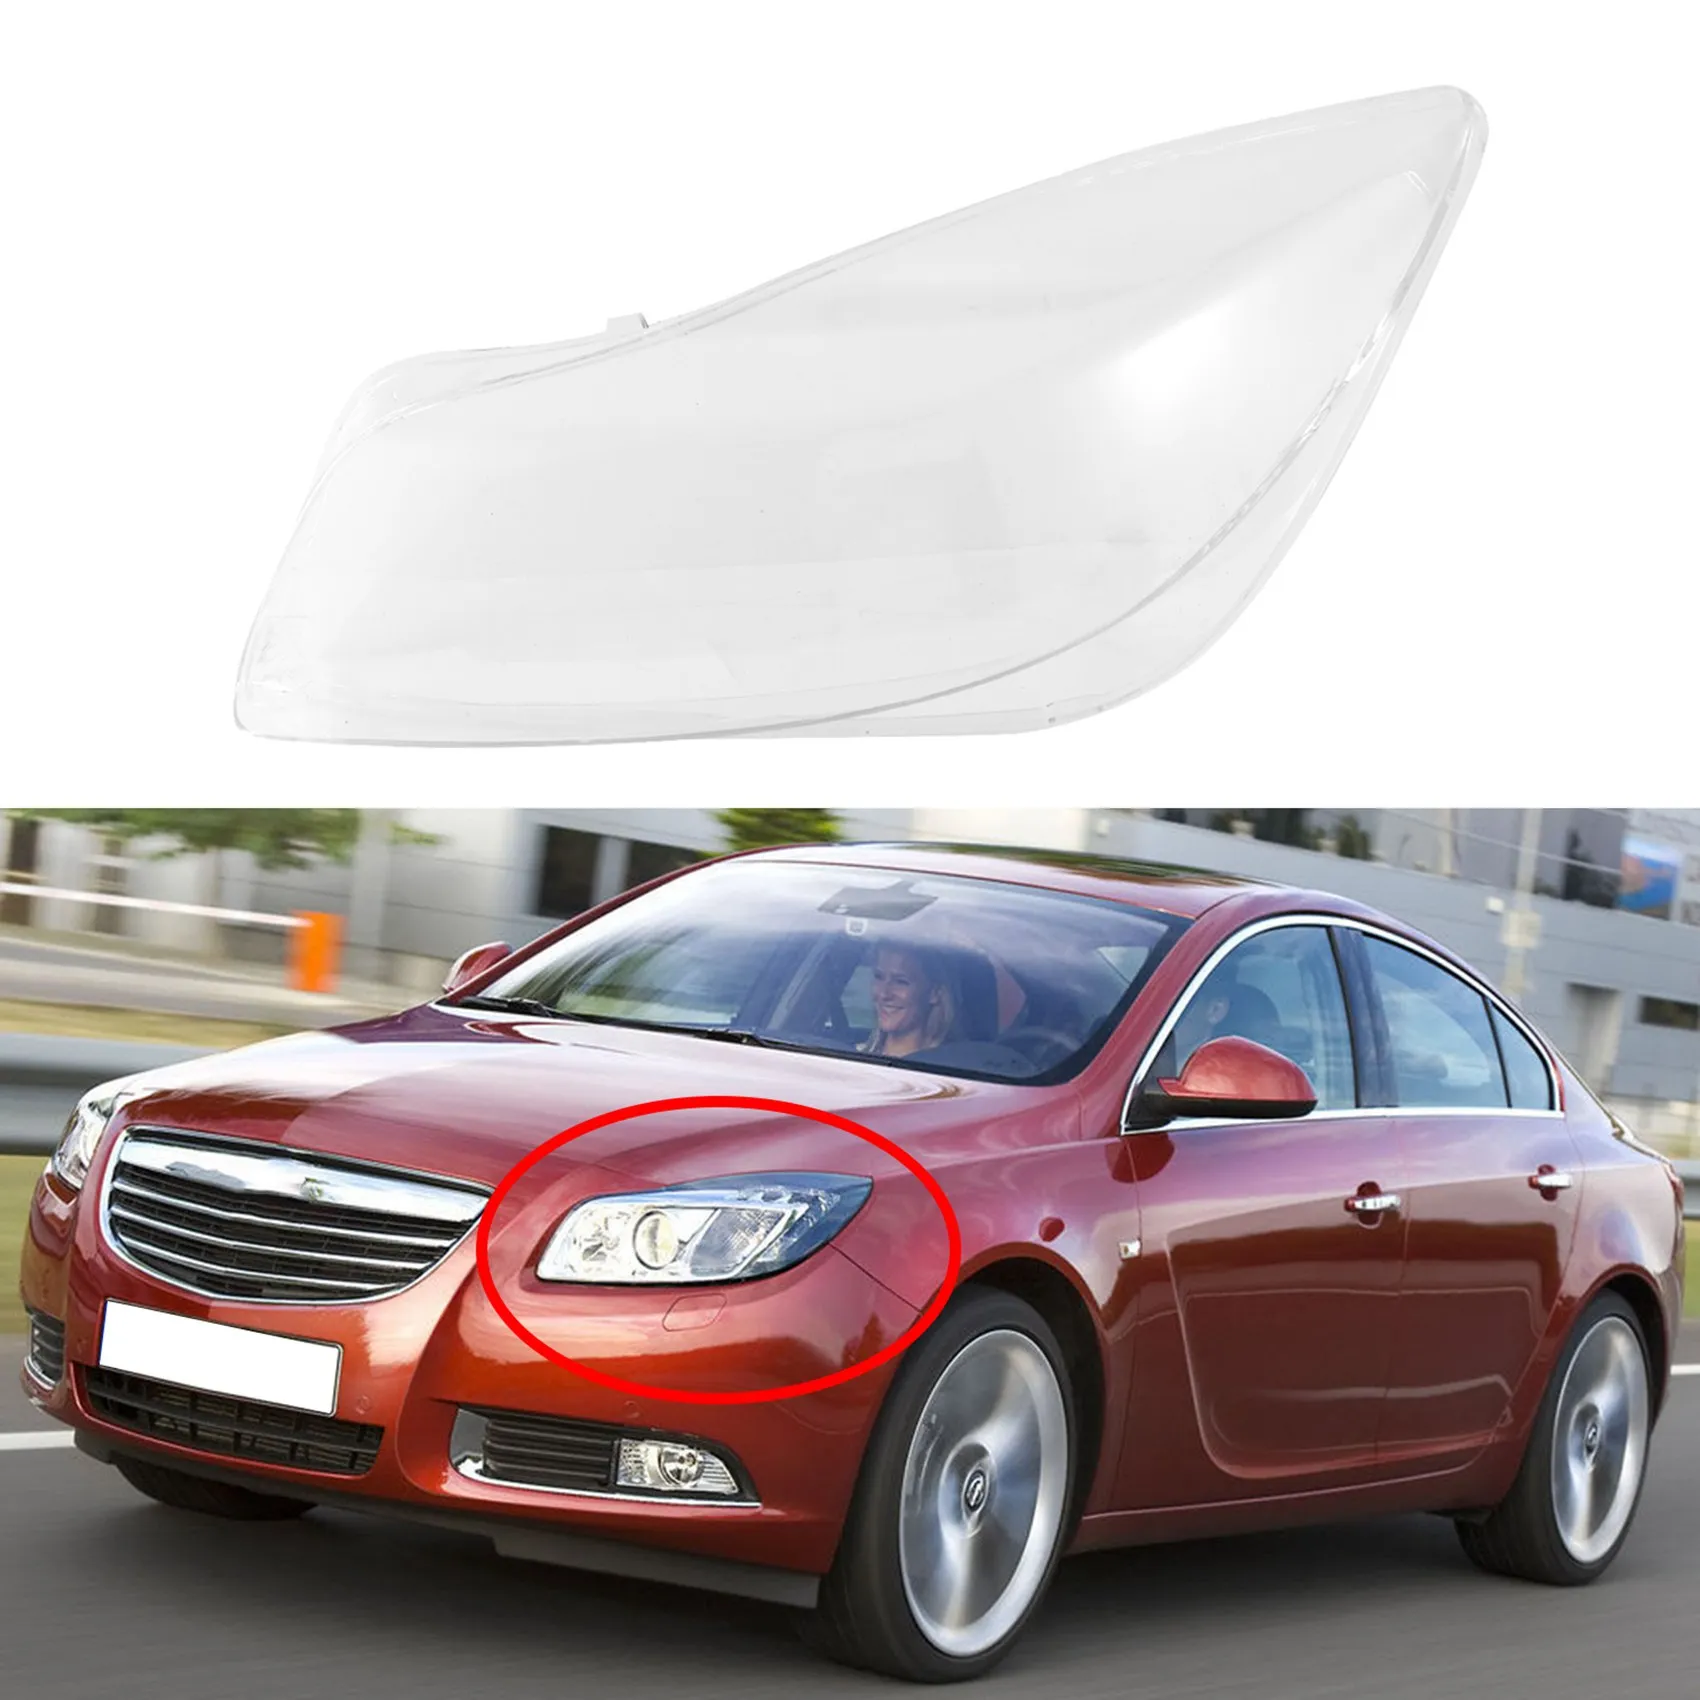 

Автомобильный левый прозрачный налобный фонарь, крышка лампы, абажур, абажур, передняя фара, крышка объектива для Opel Insignia 2009-2011